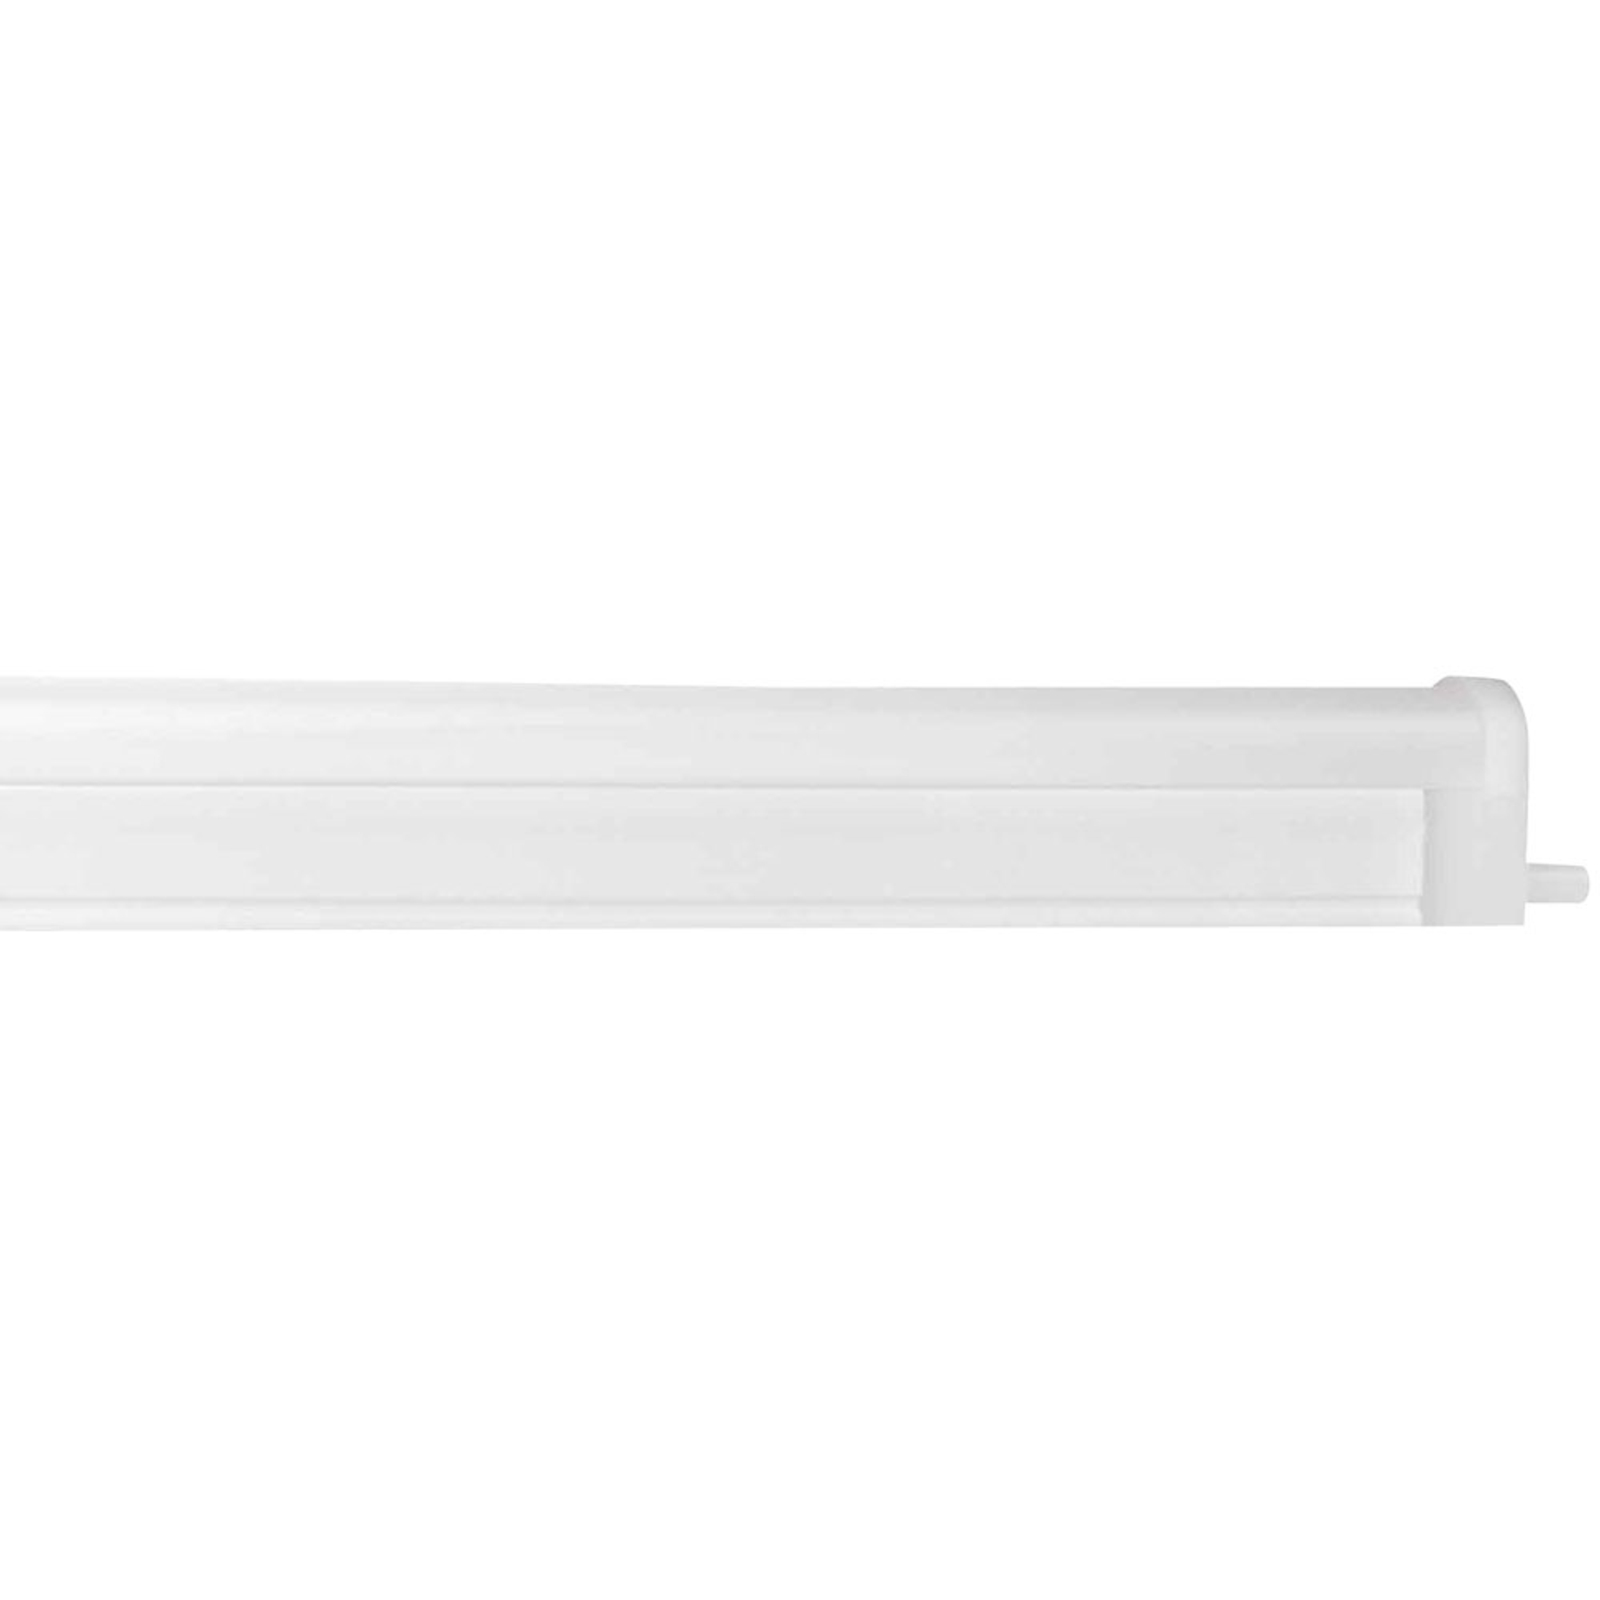 Växtlampa  - Megaman Pinolite LED-växtlampa, 58 cm, 8,5 W